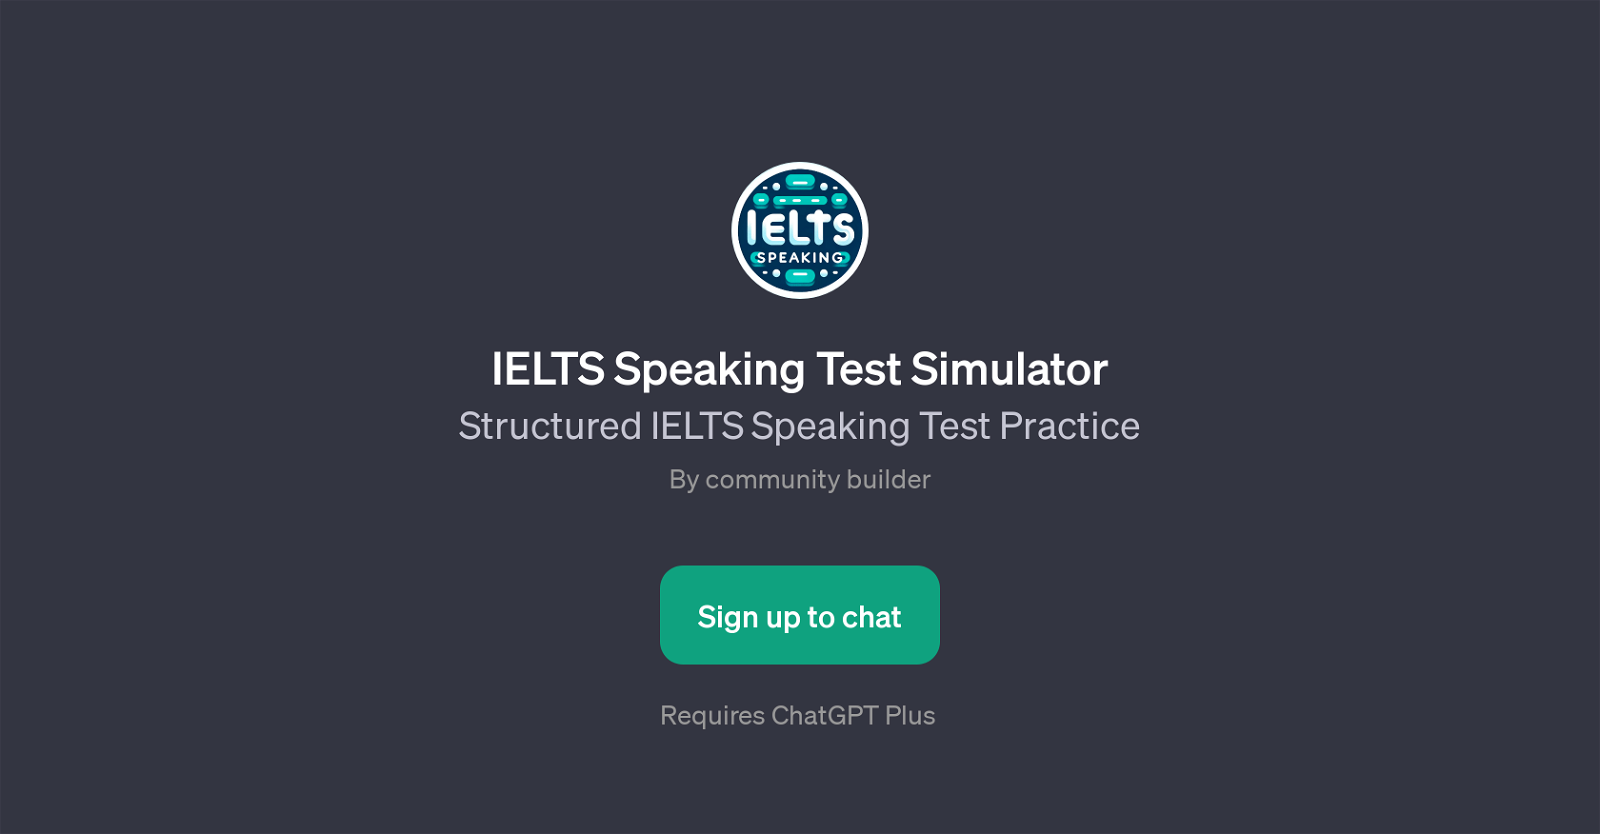 IELTS Speaking Test Simulator website